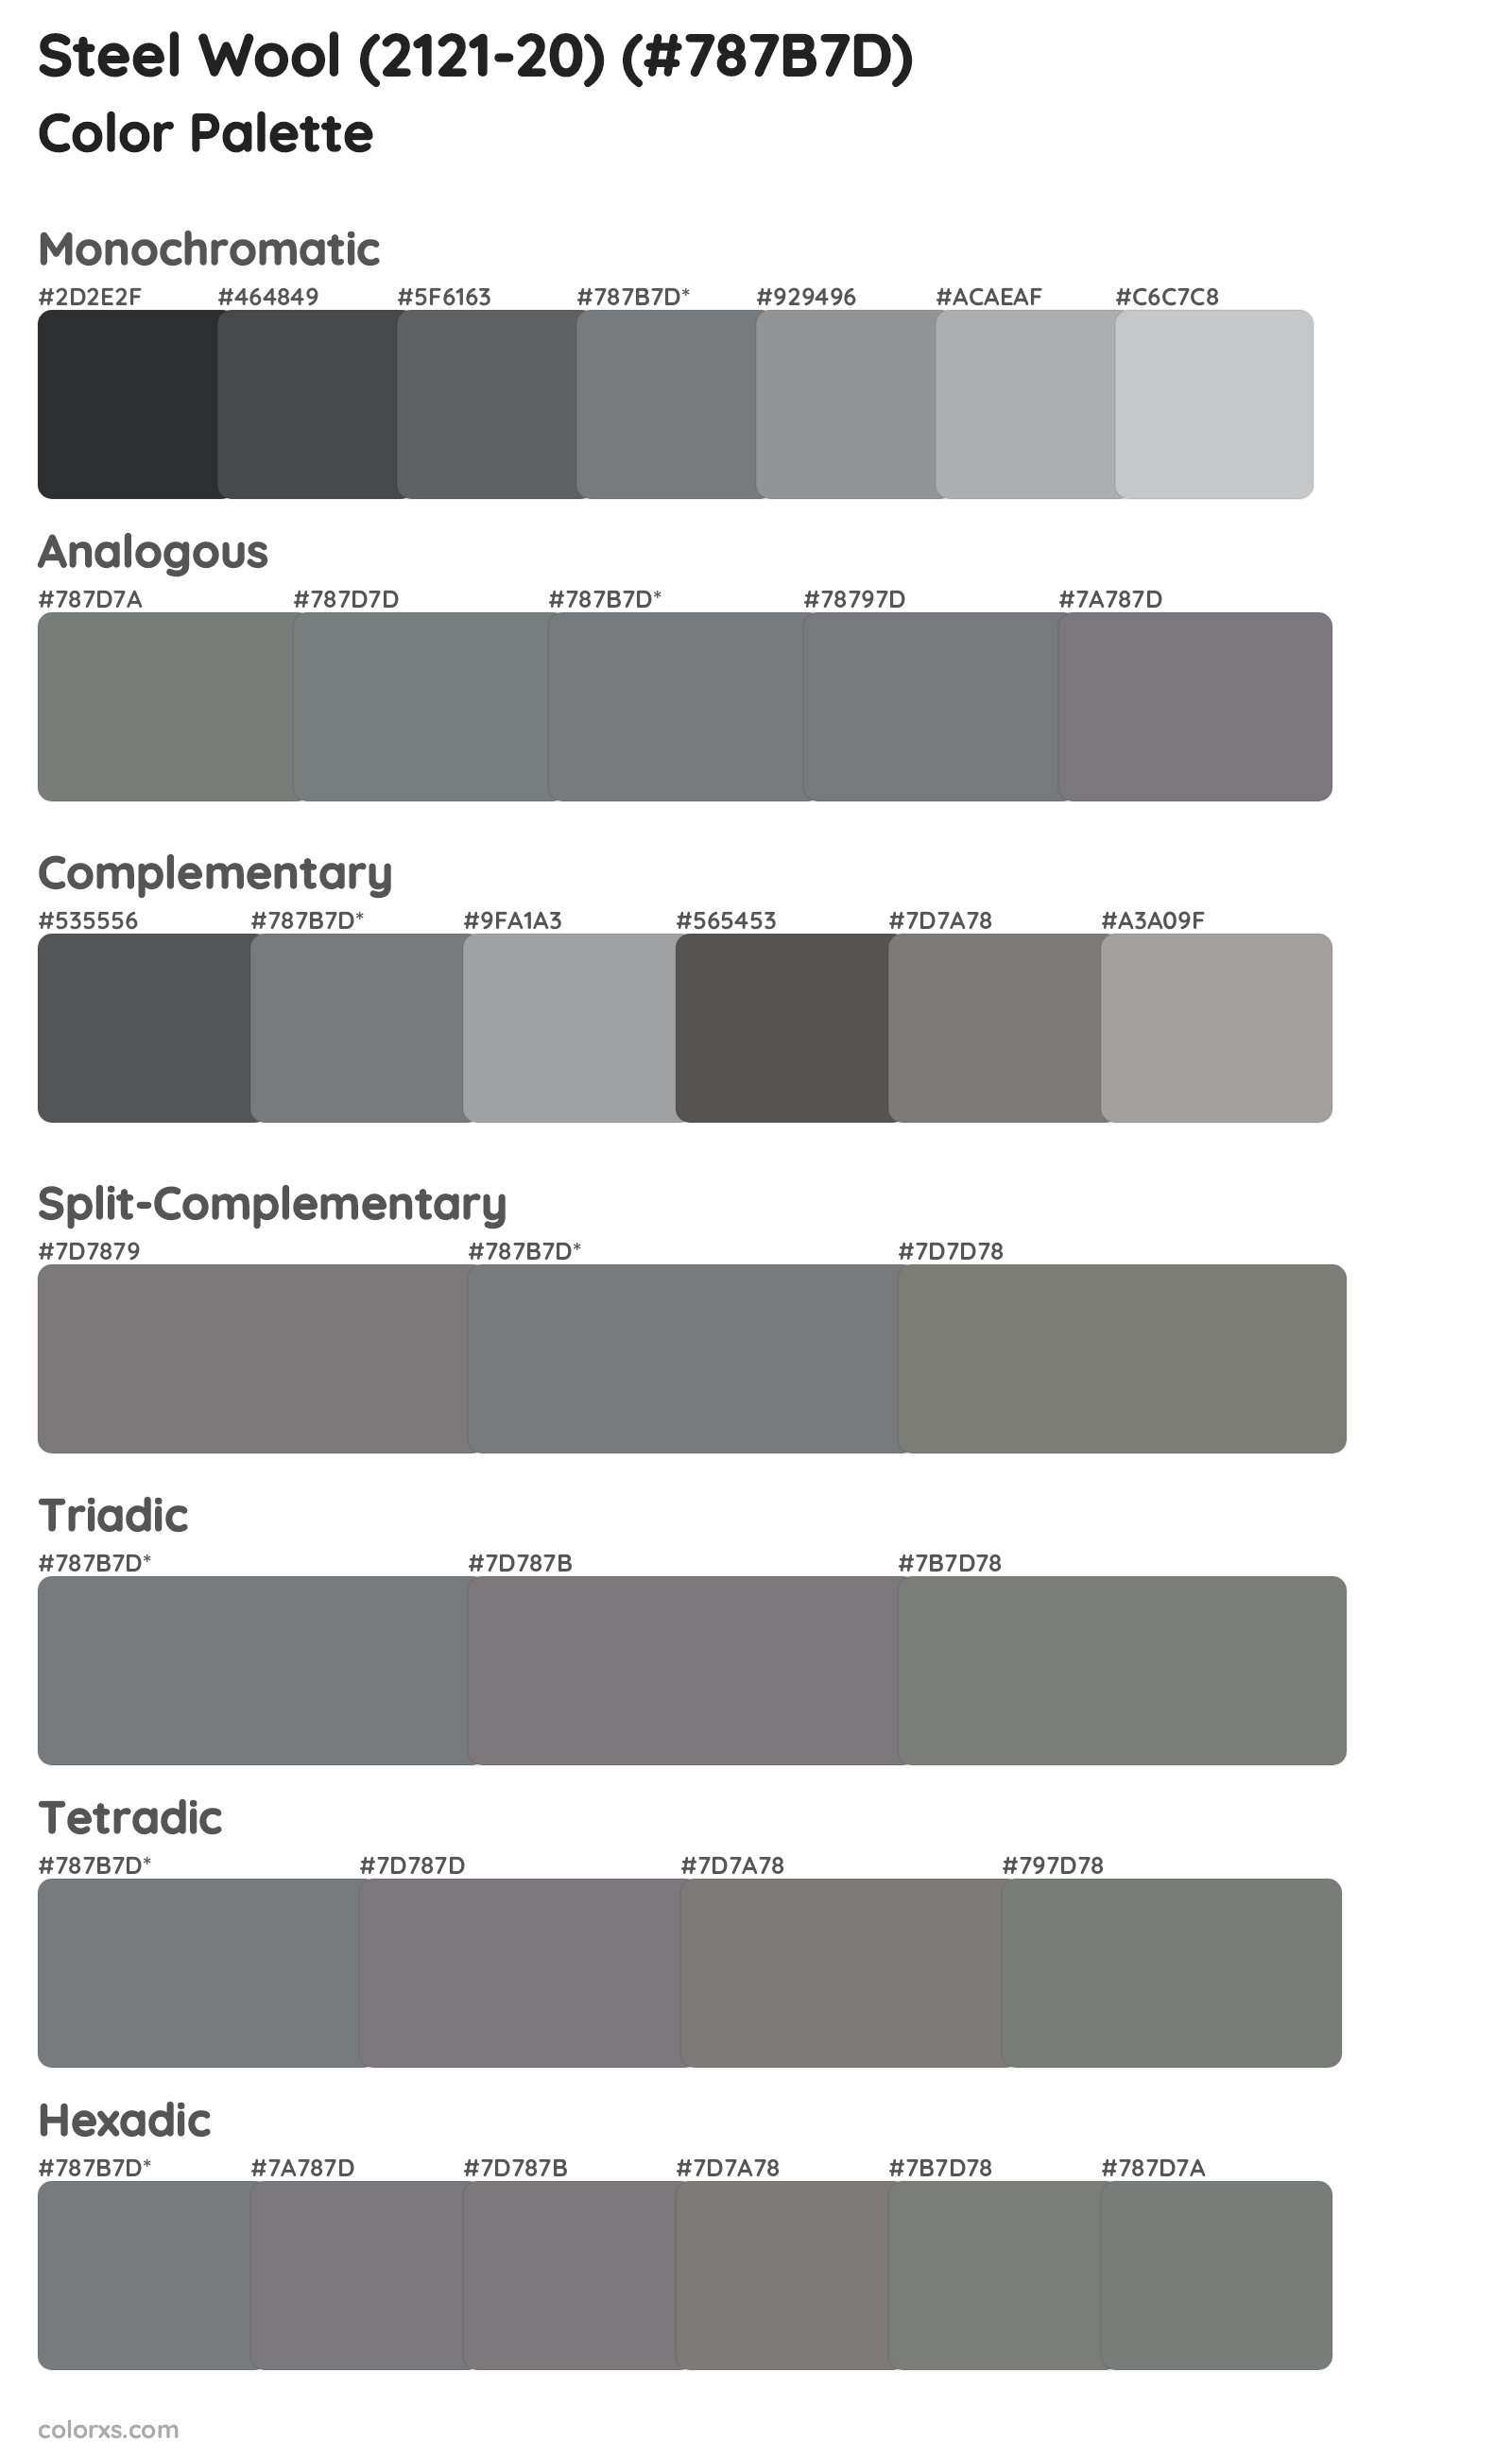 Steel Wool (2121-20) Color Scheme Palettes